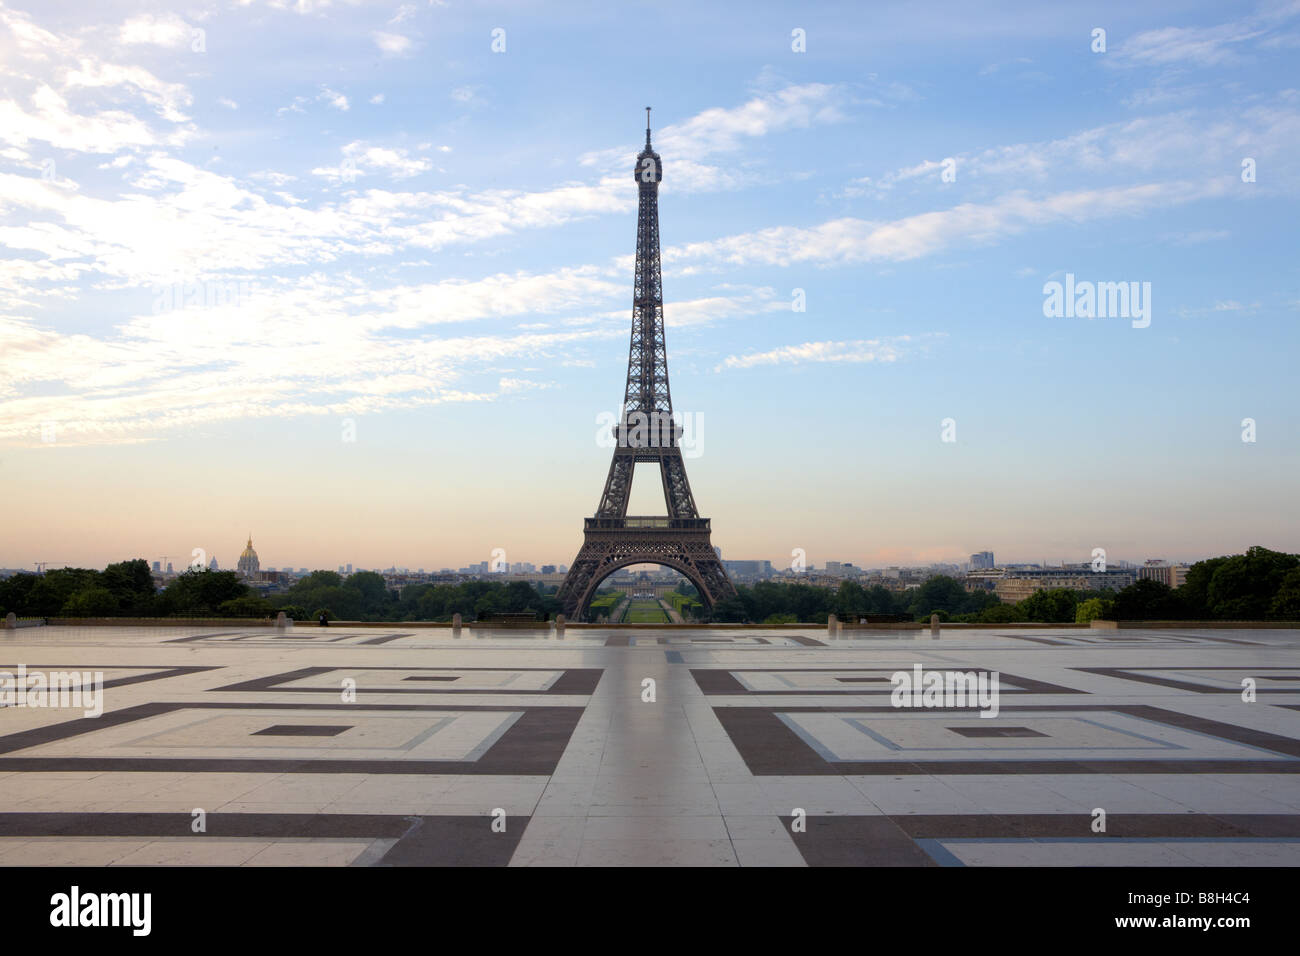 Eiffel Tower in Paris, France. Stock Photo